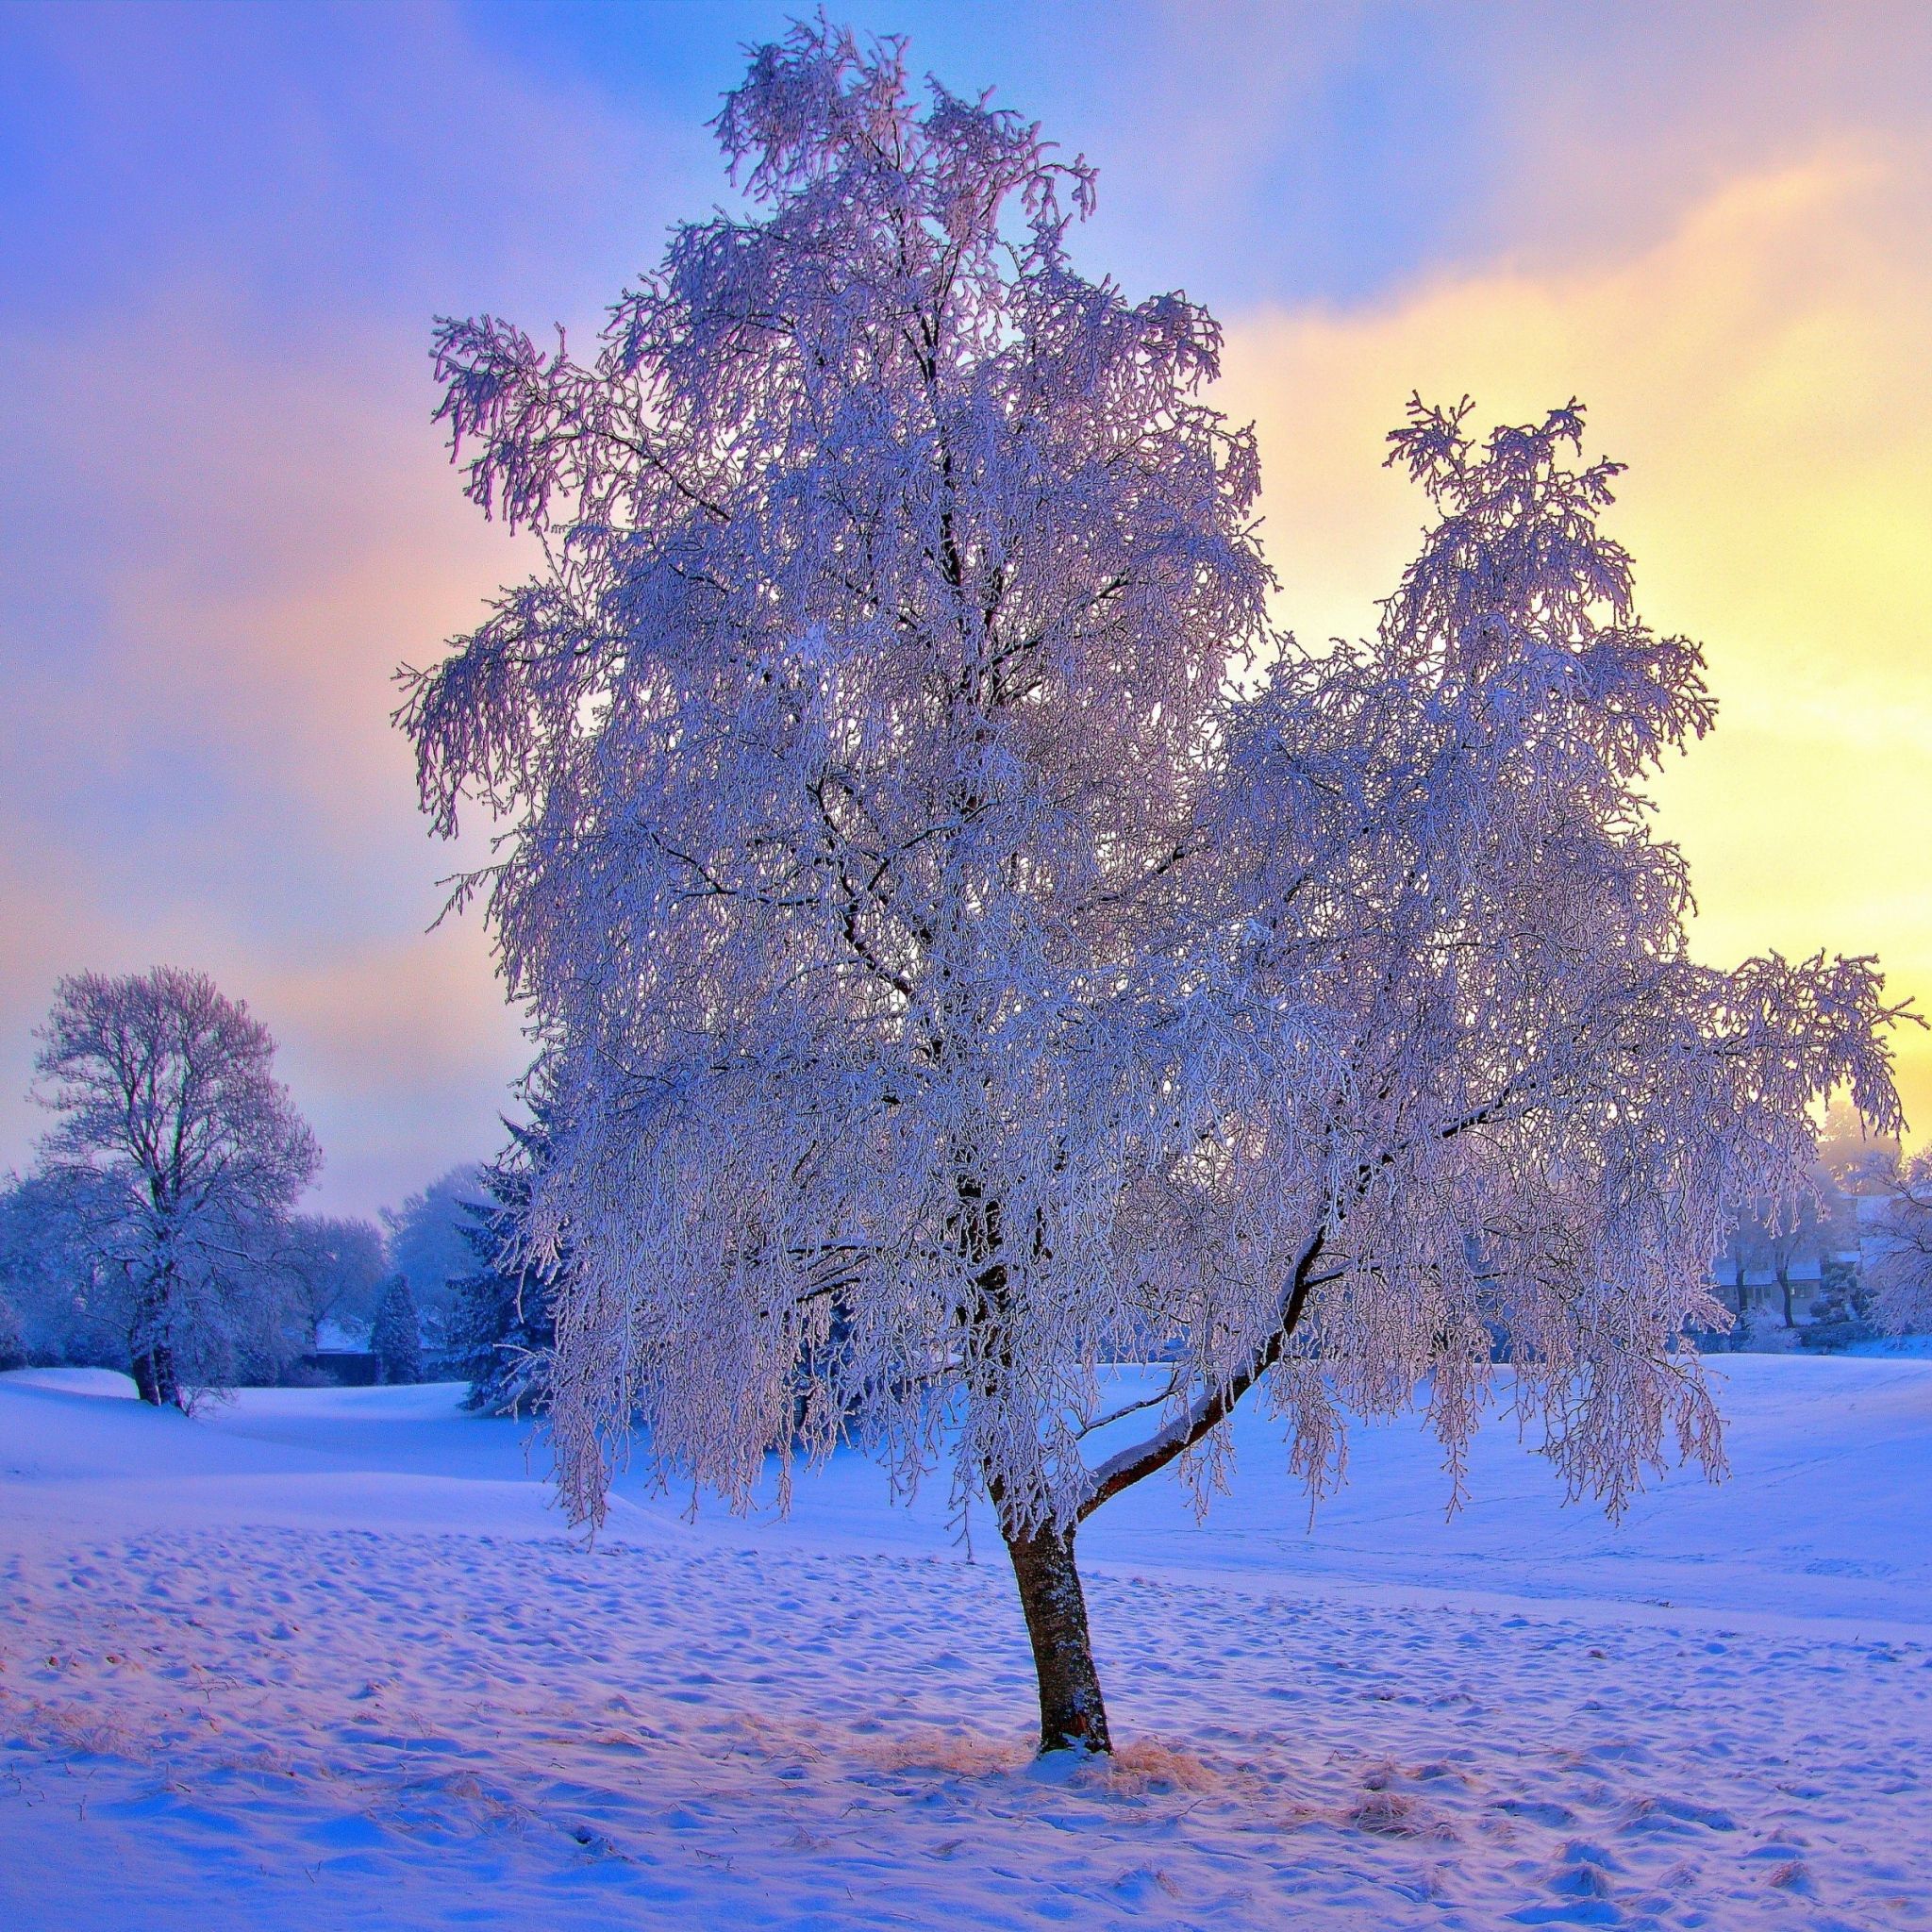 Wallpaper inverno, neve, geada, árvore, árvores, sol. Winter wallpaper, Winter sunset, Winter photography